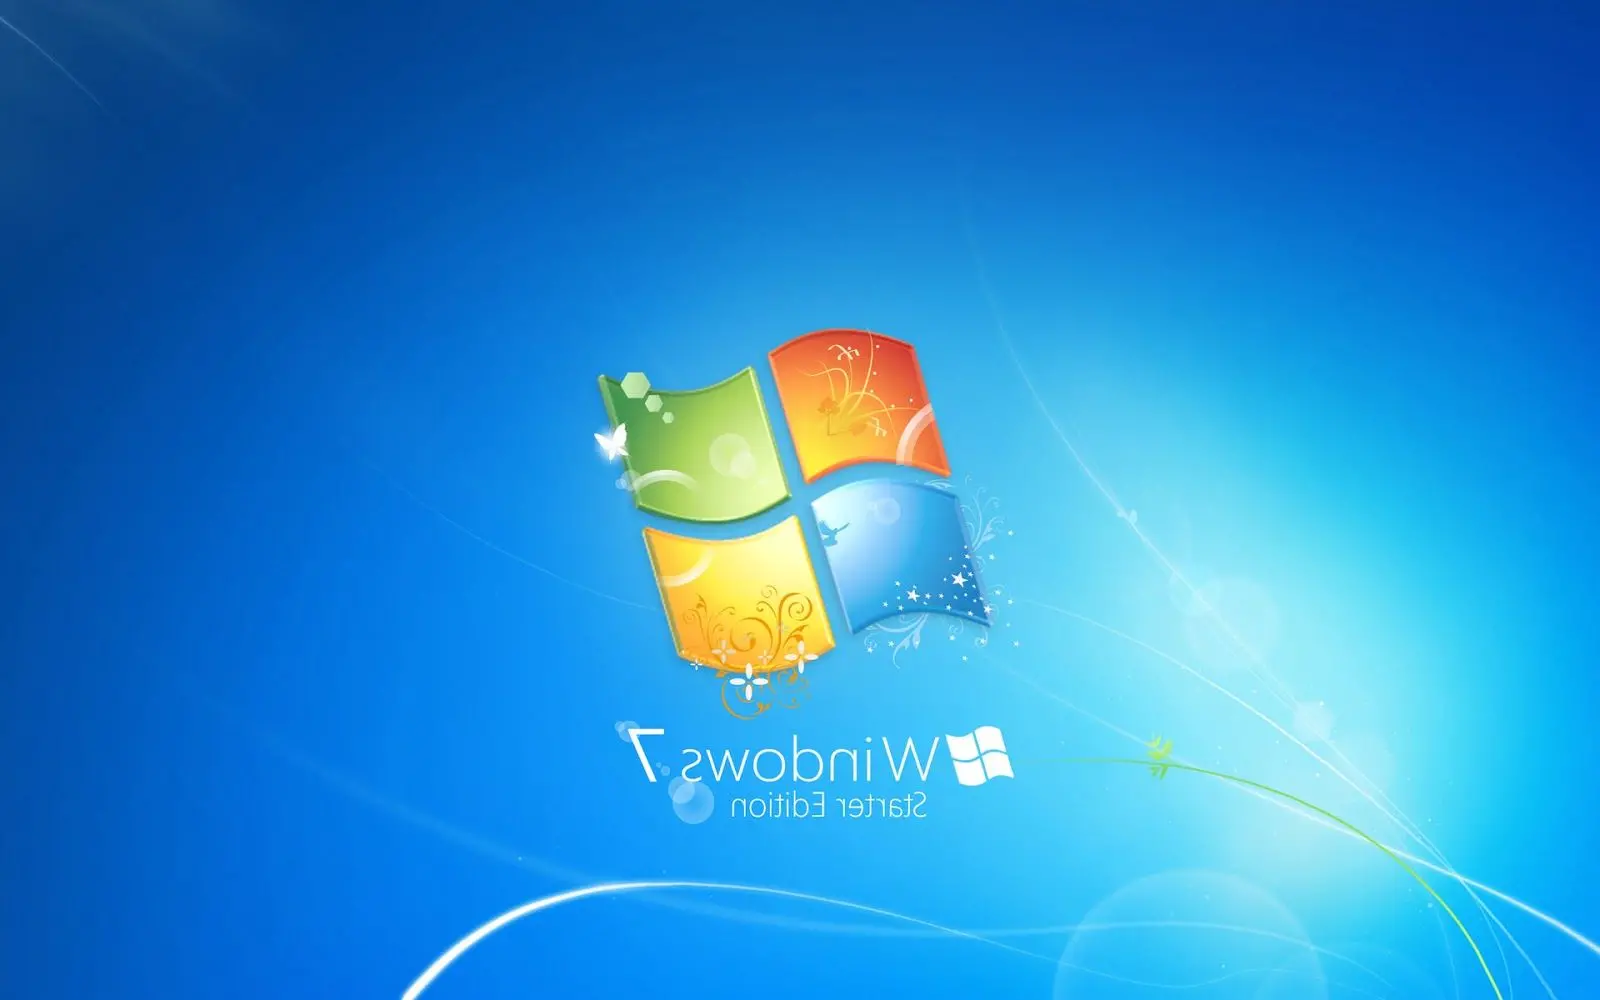 Wallpaper Windows 7 yang indah dan bermakna yang tidak dapat Anda abaikan